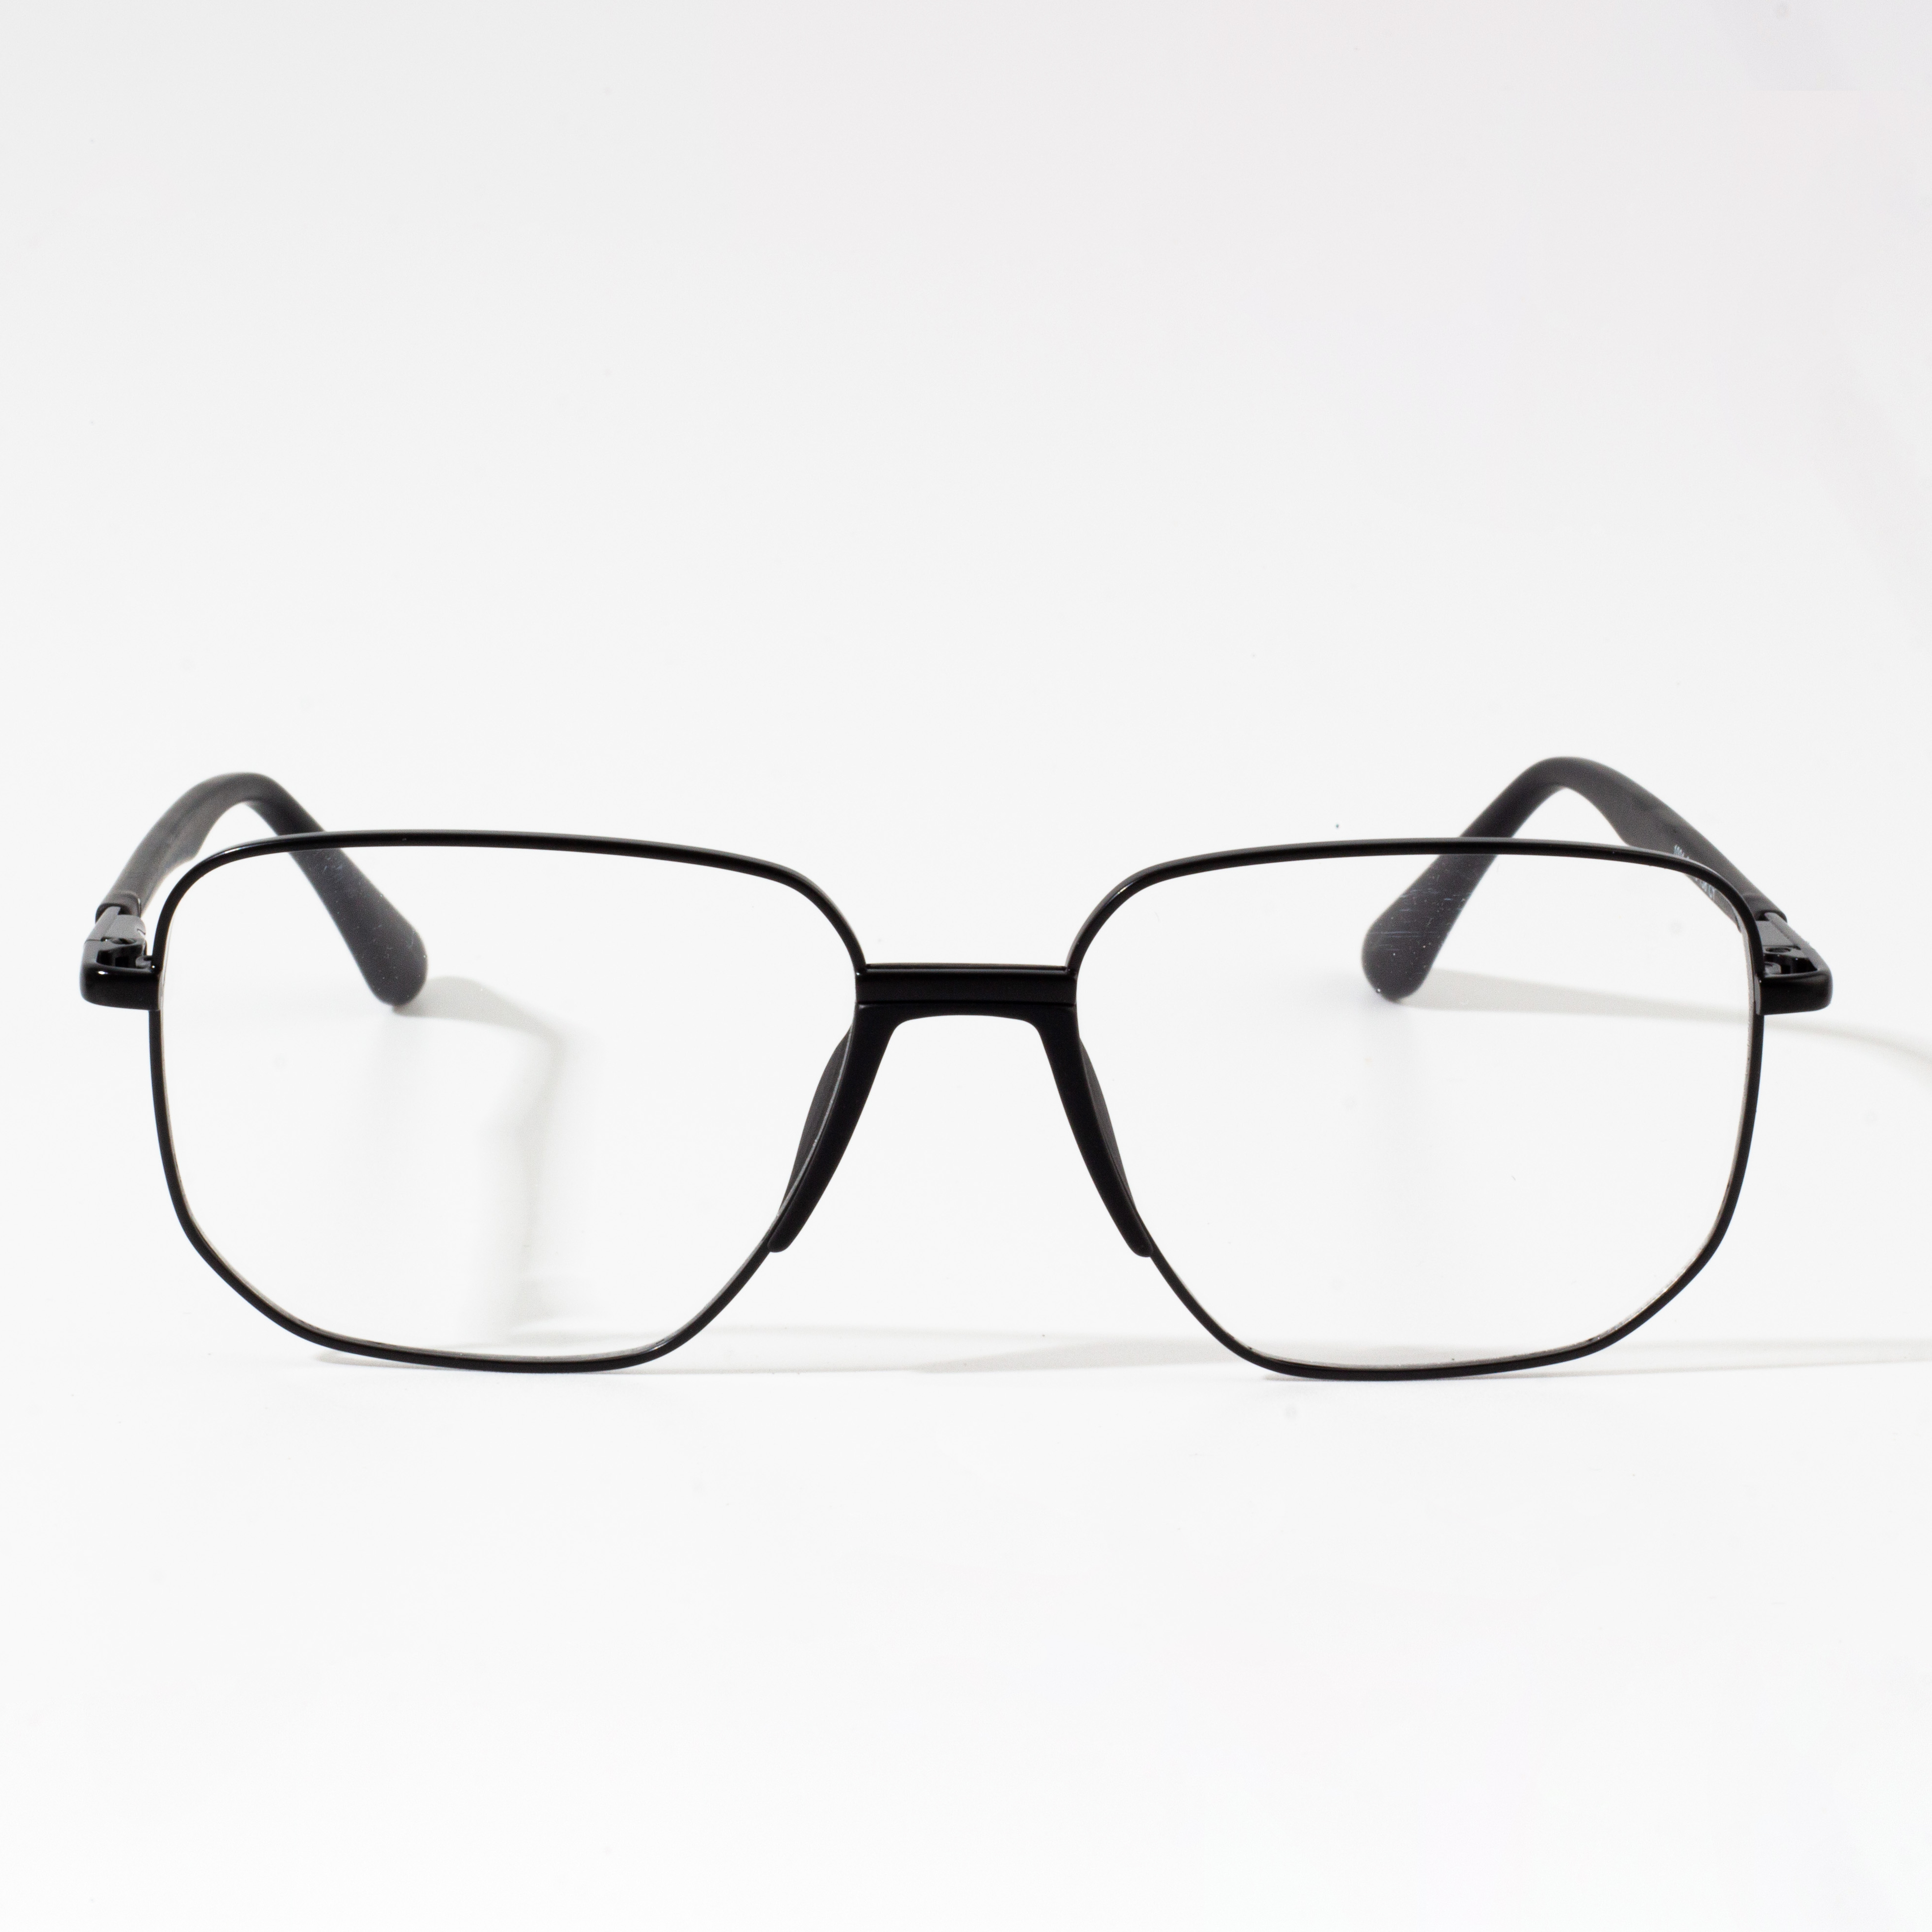 Titanium Glasses Frame (4)